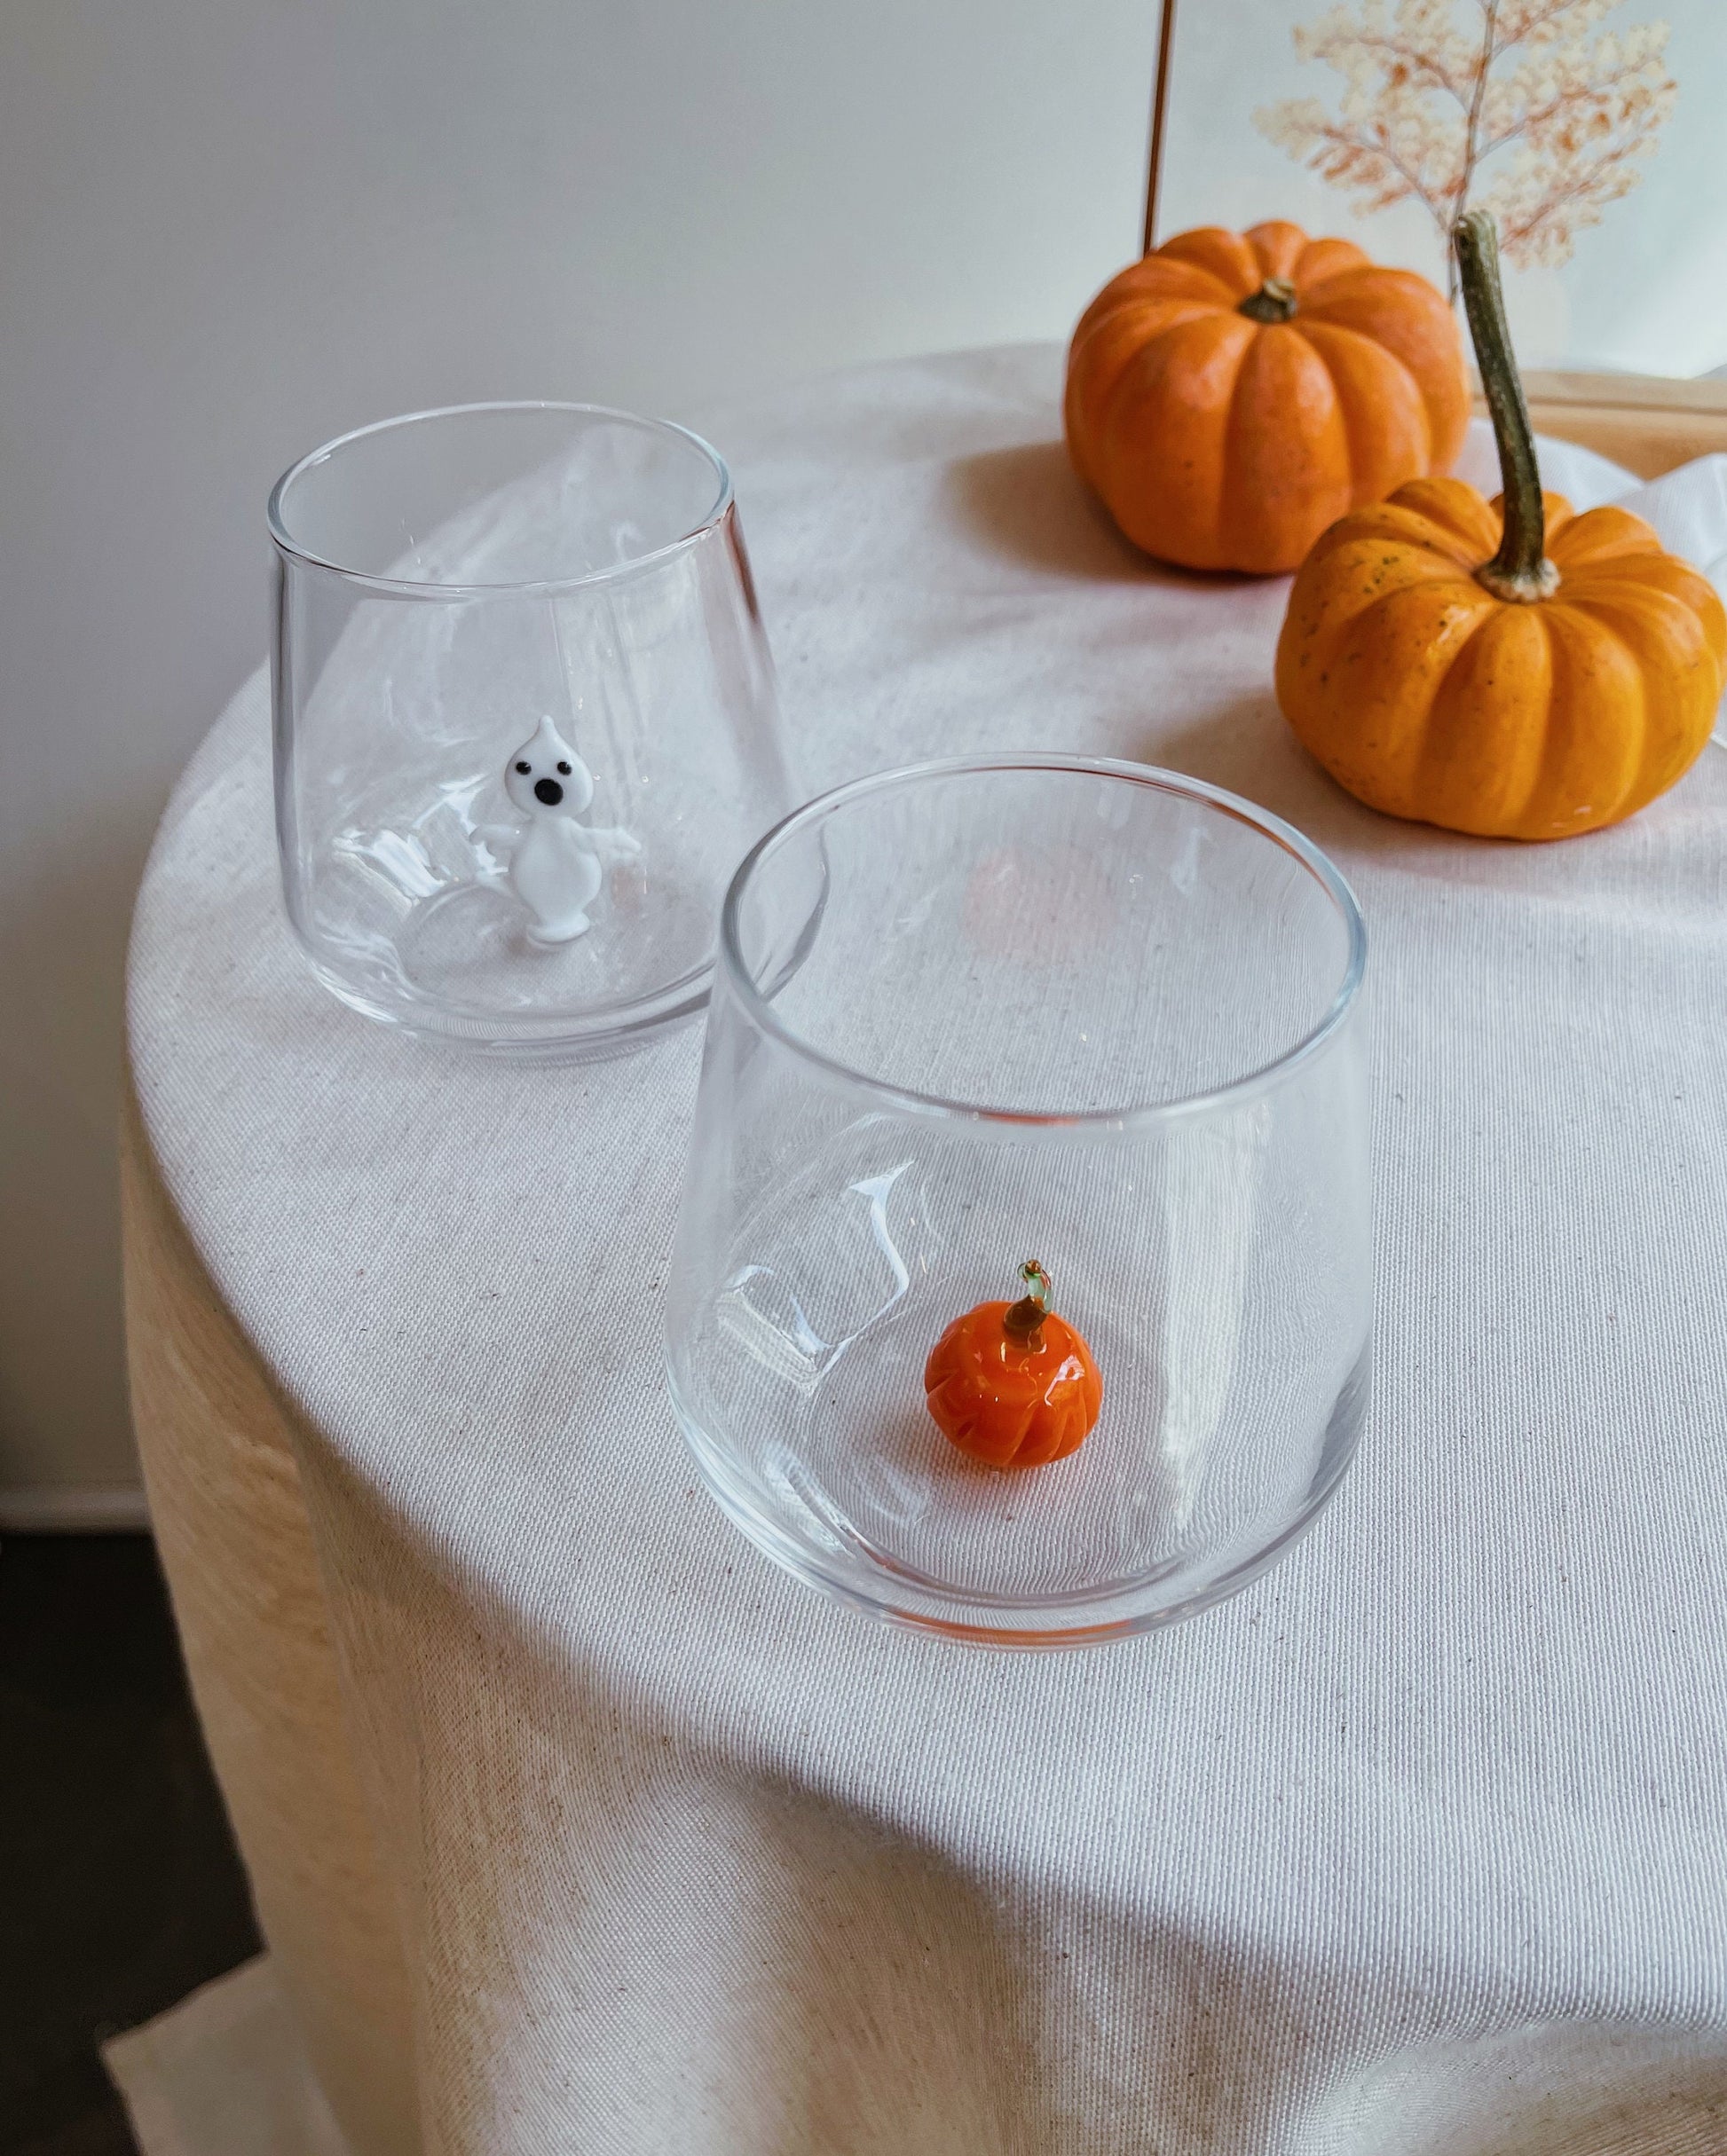 2 glass ghost tumbler wine glass,glass ghosts Inside Halloween